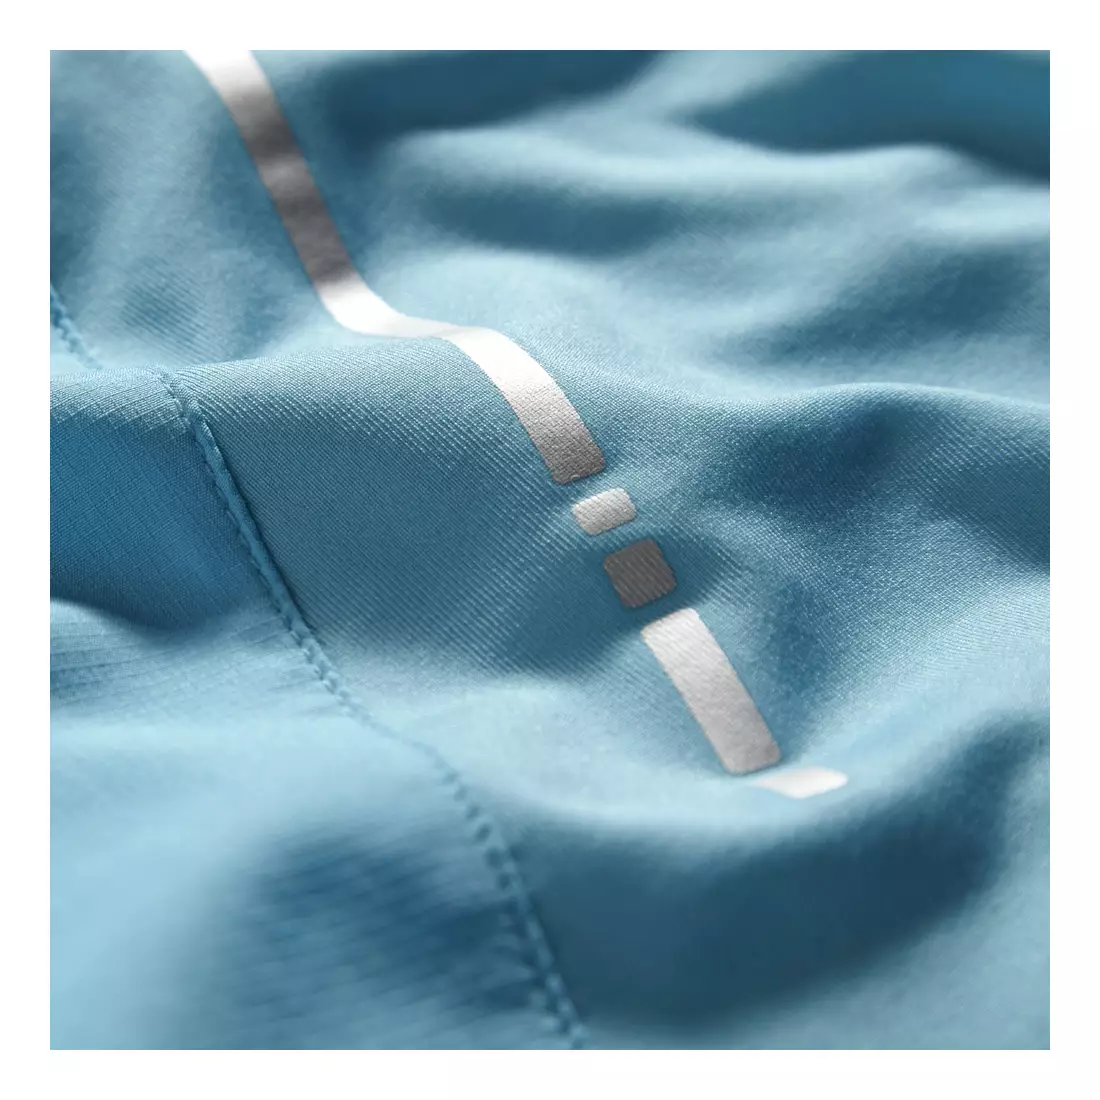 ASICS 110426-0877 WOVEN JACKET - dámská běžecká bunda, barva: Modrá